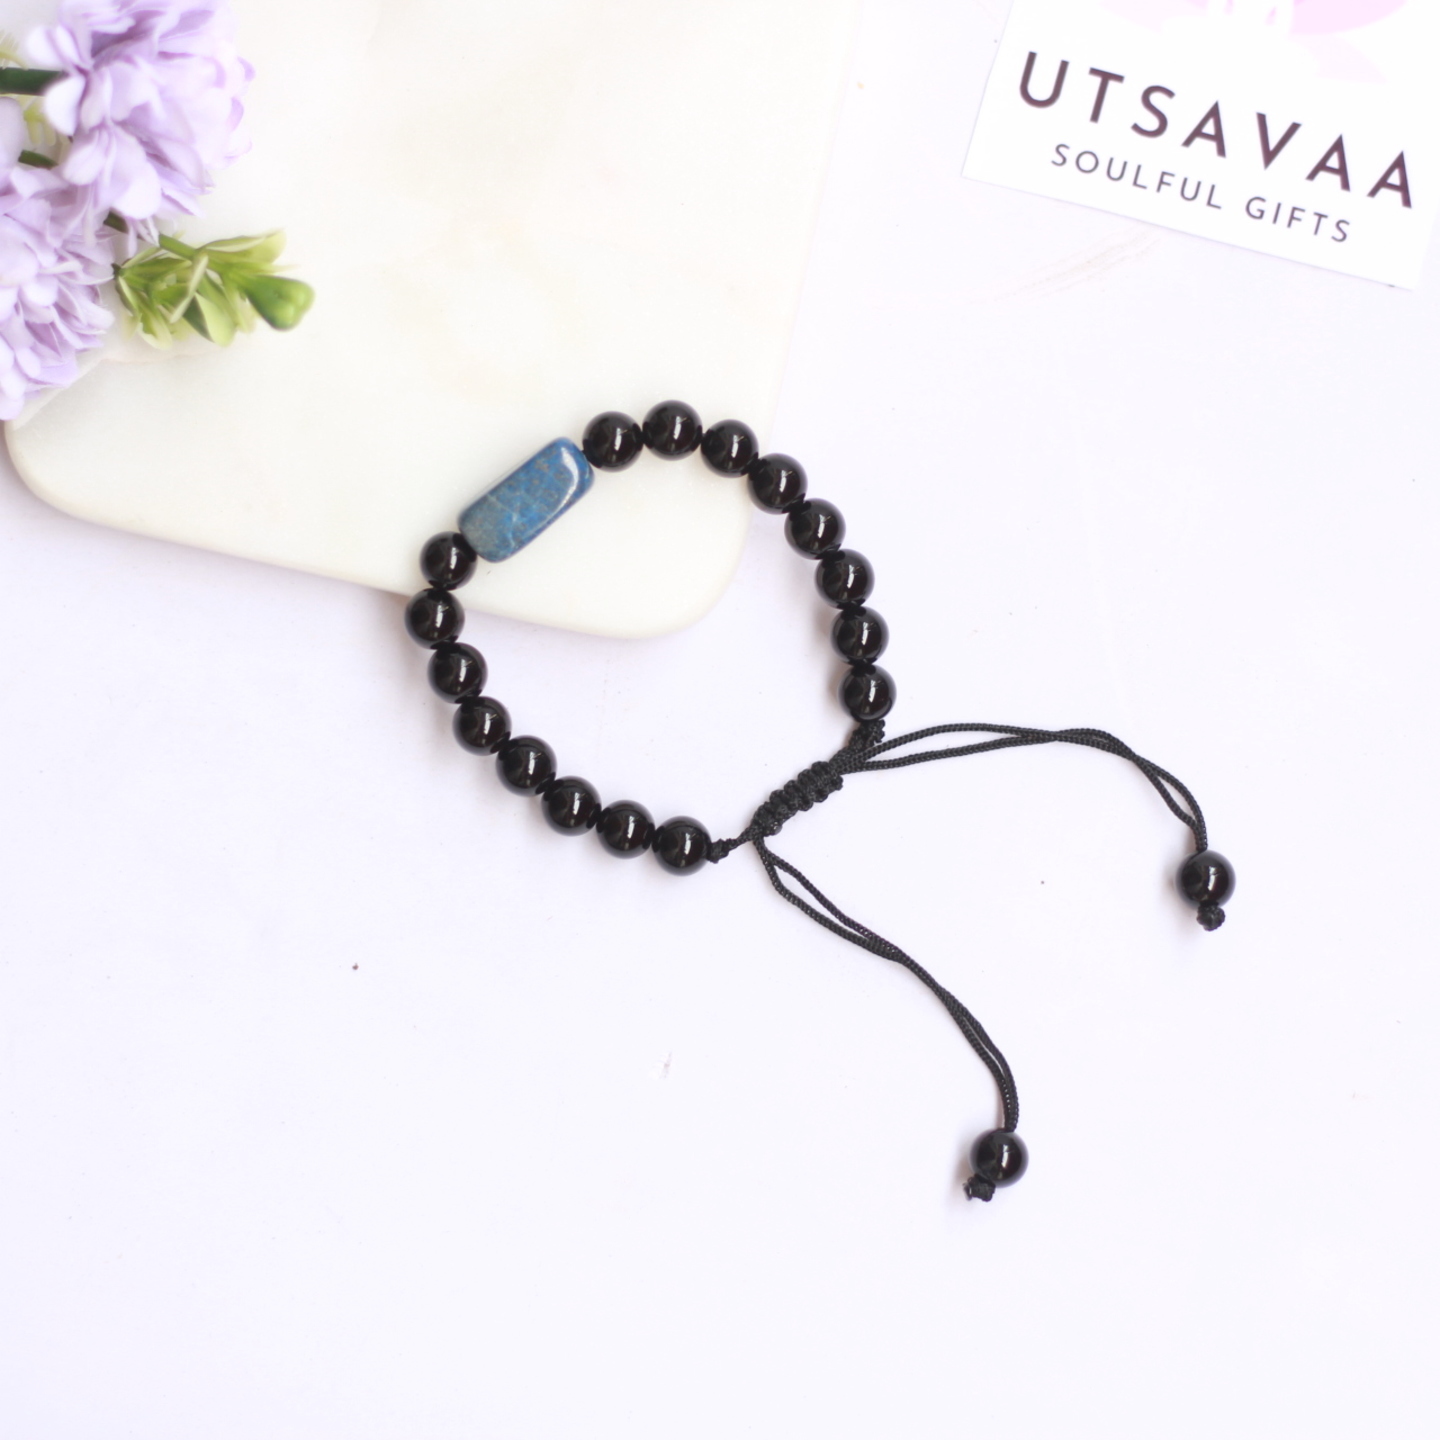 Communication & Protection Bracelet - Utsavaa